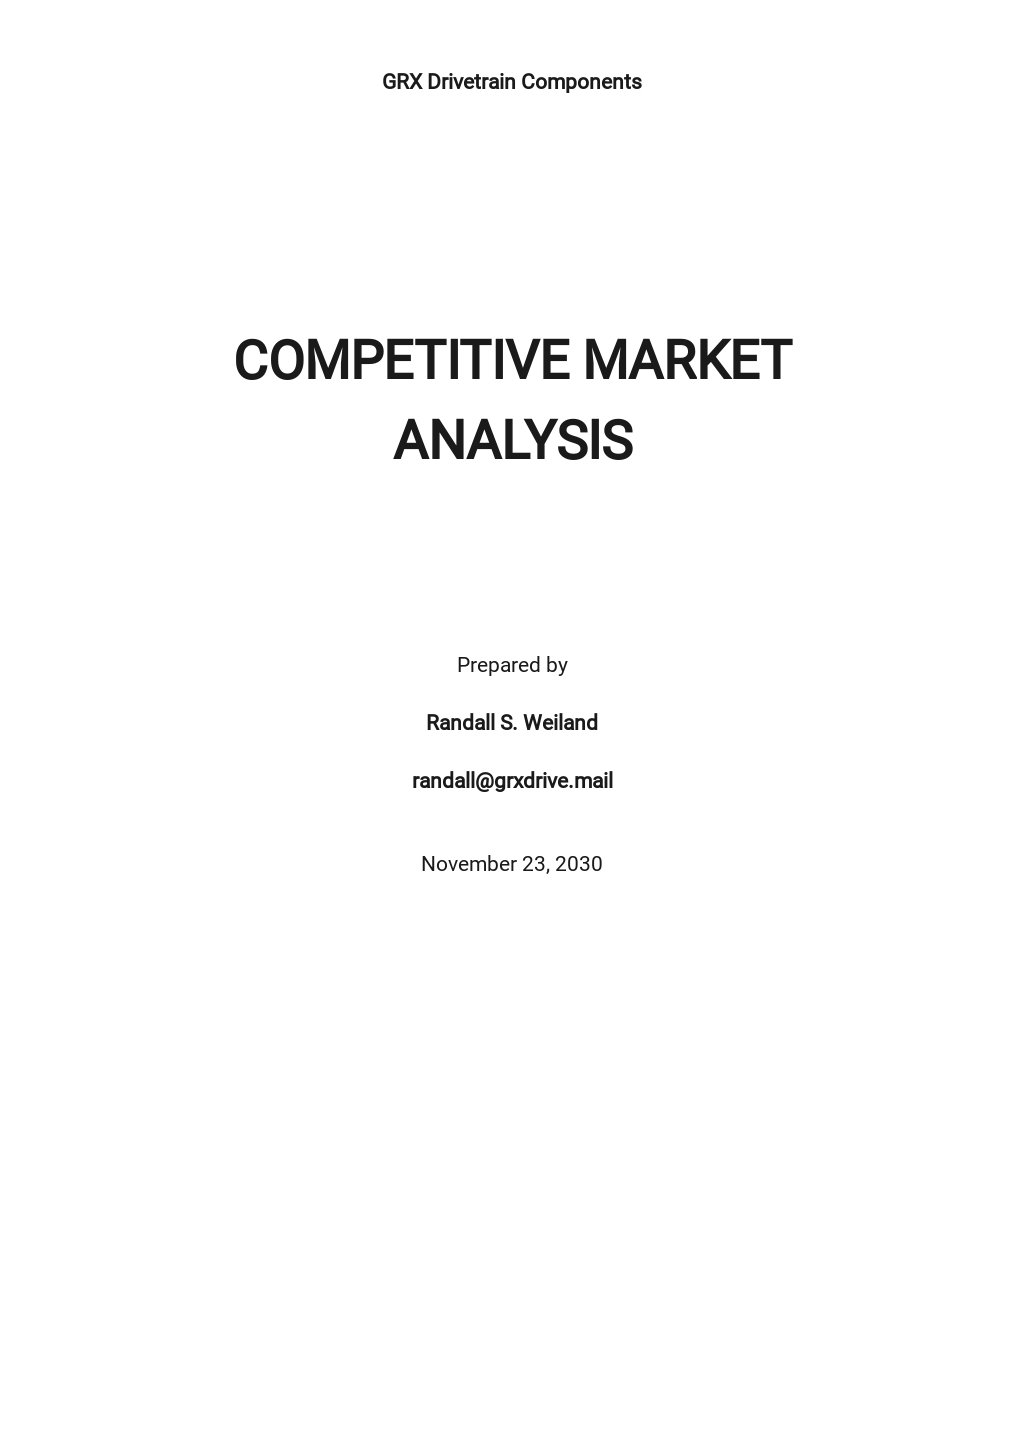 market analysis cover letter